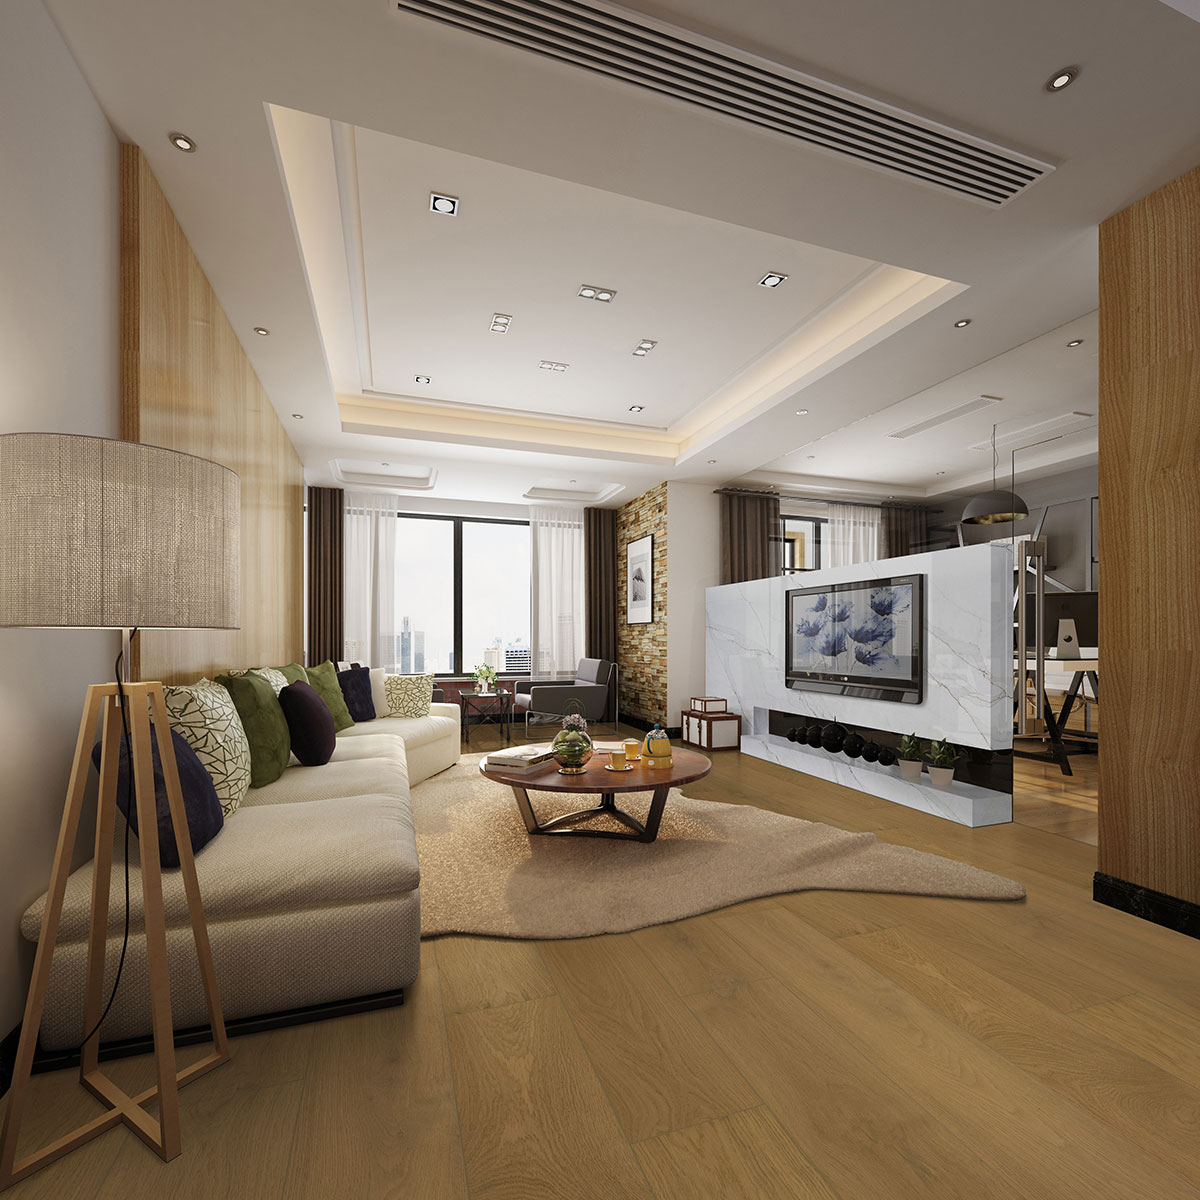 Northcutt Engineered Hardwood Flooring in living room